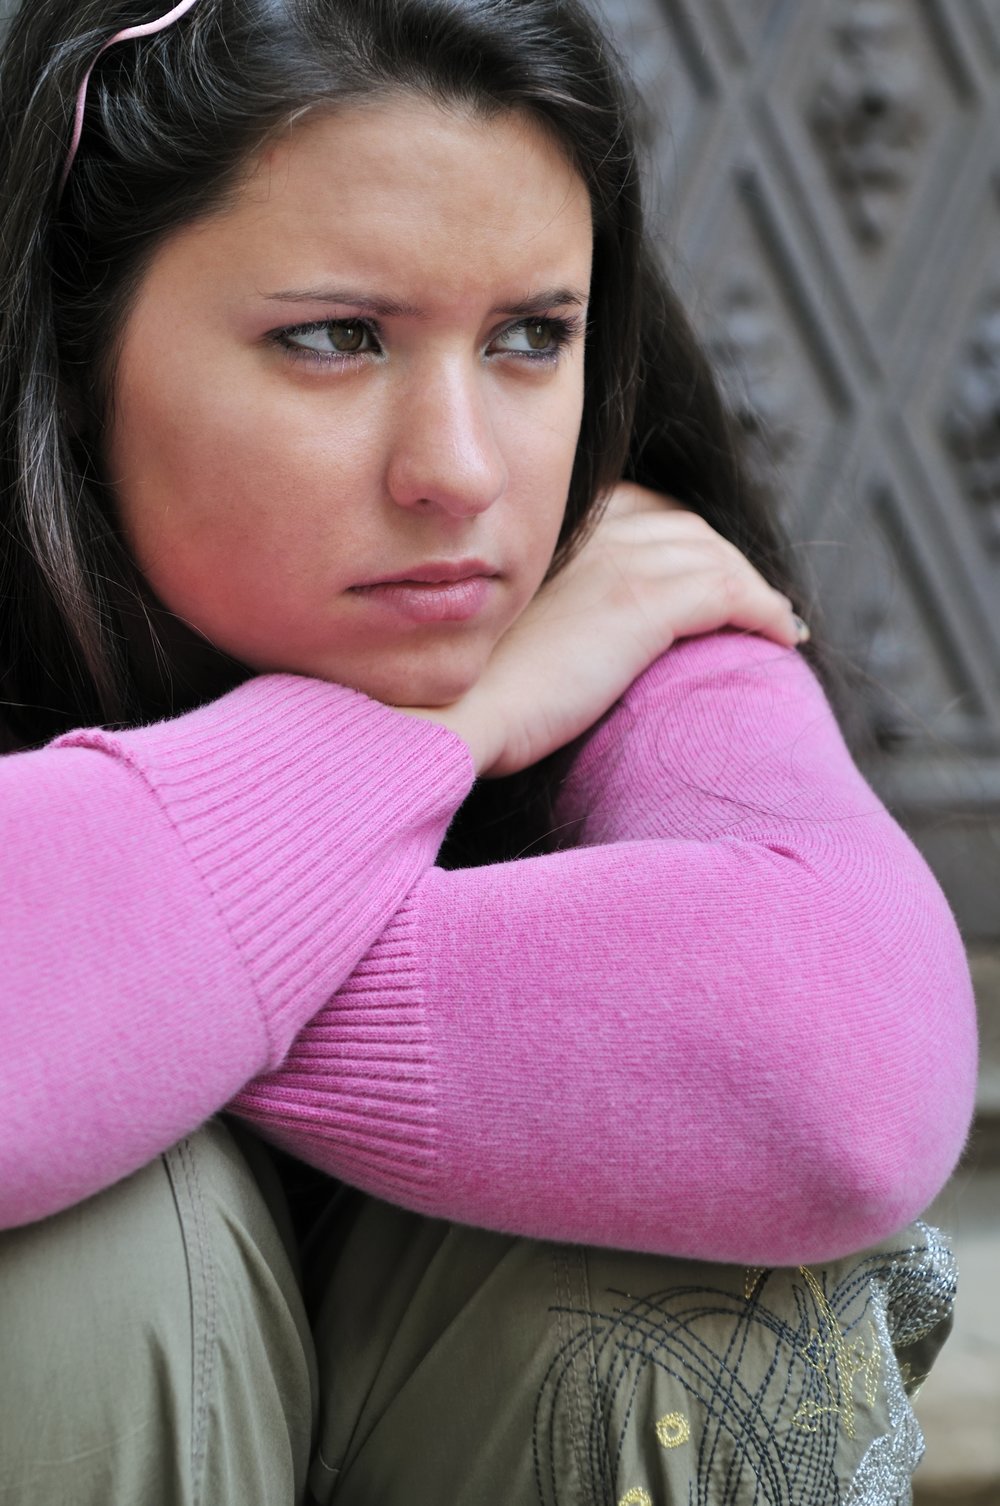 Suicide Warning Signs Among Teens Battling Addiction